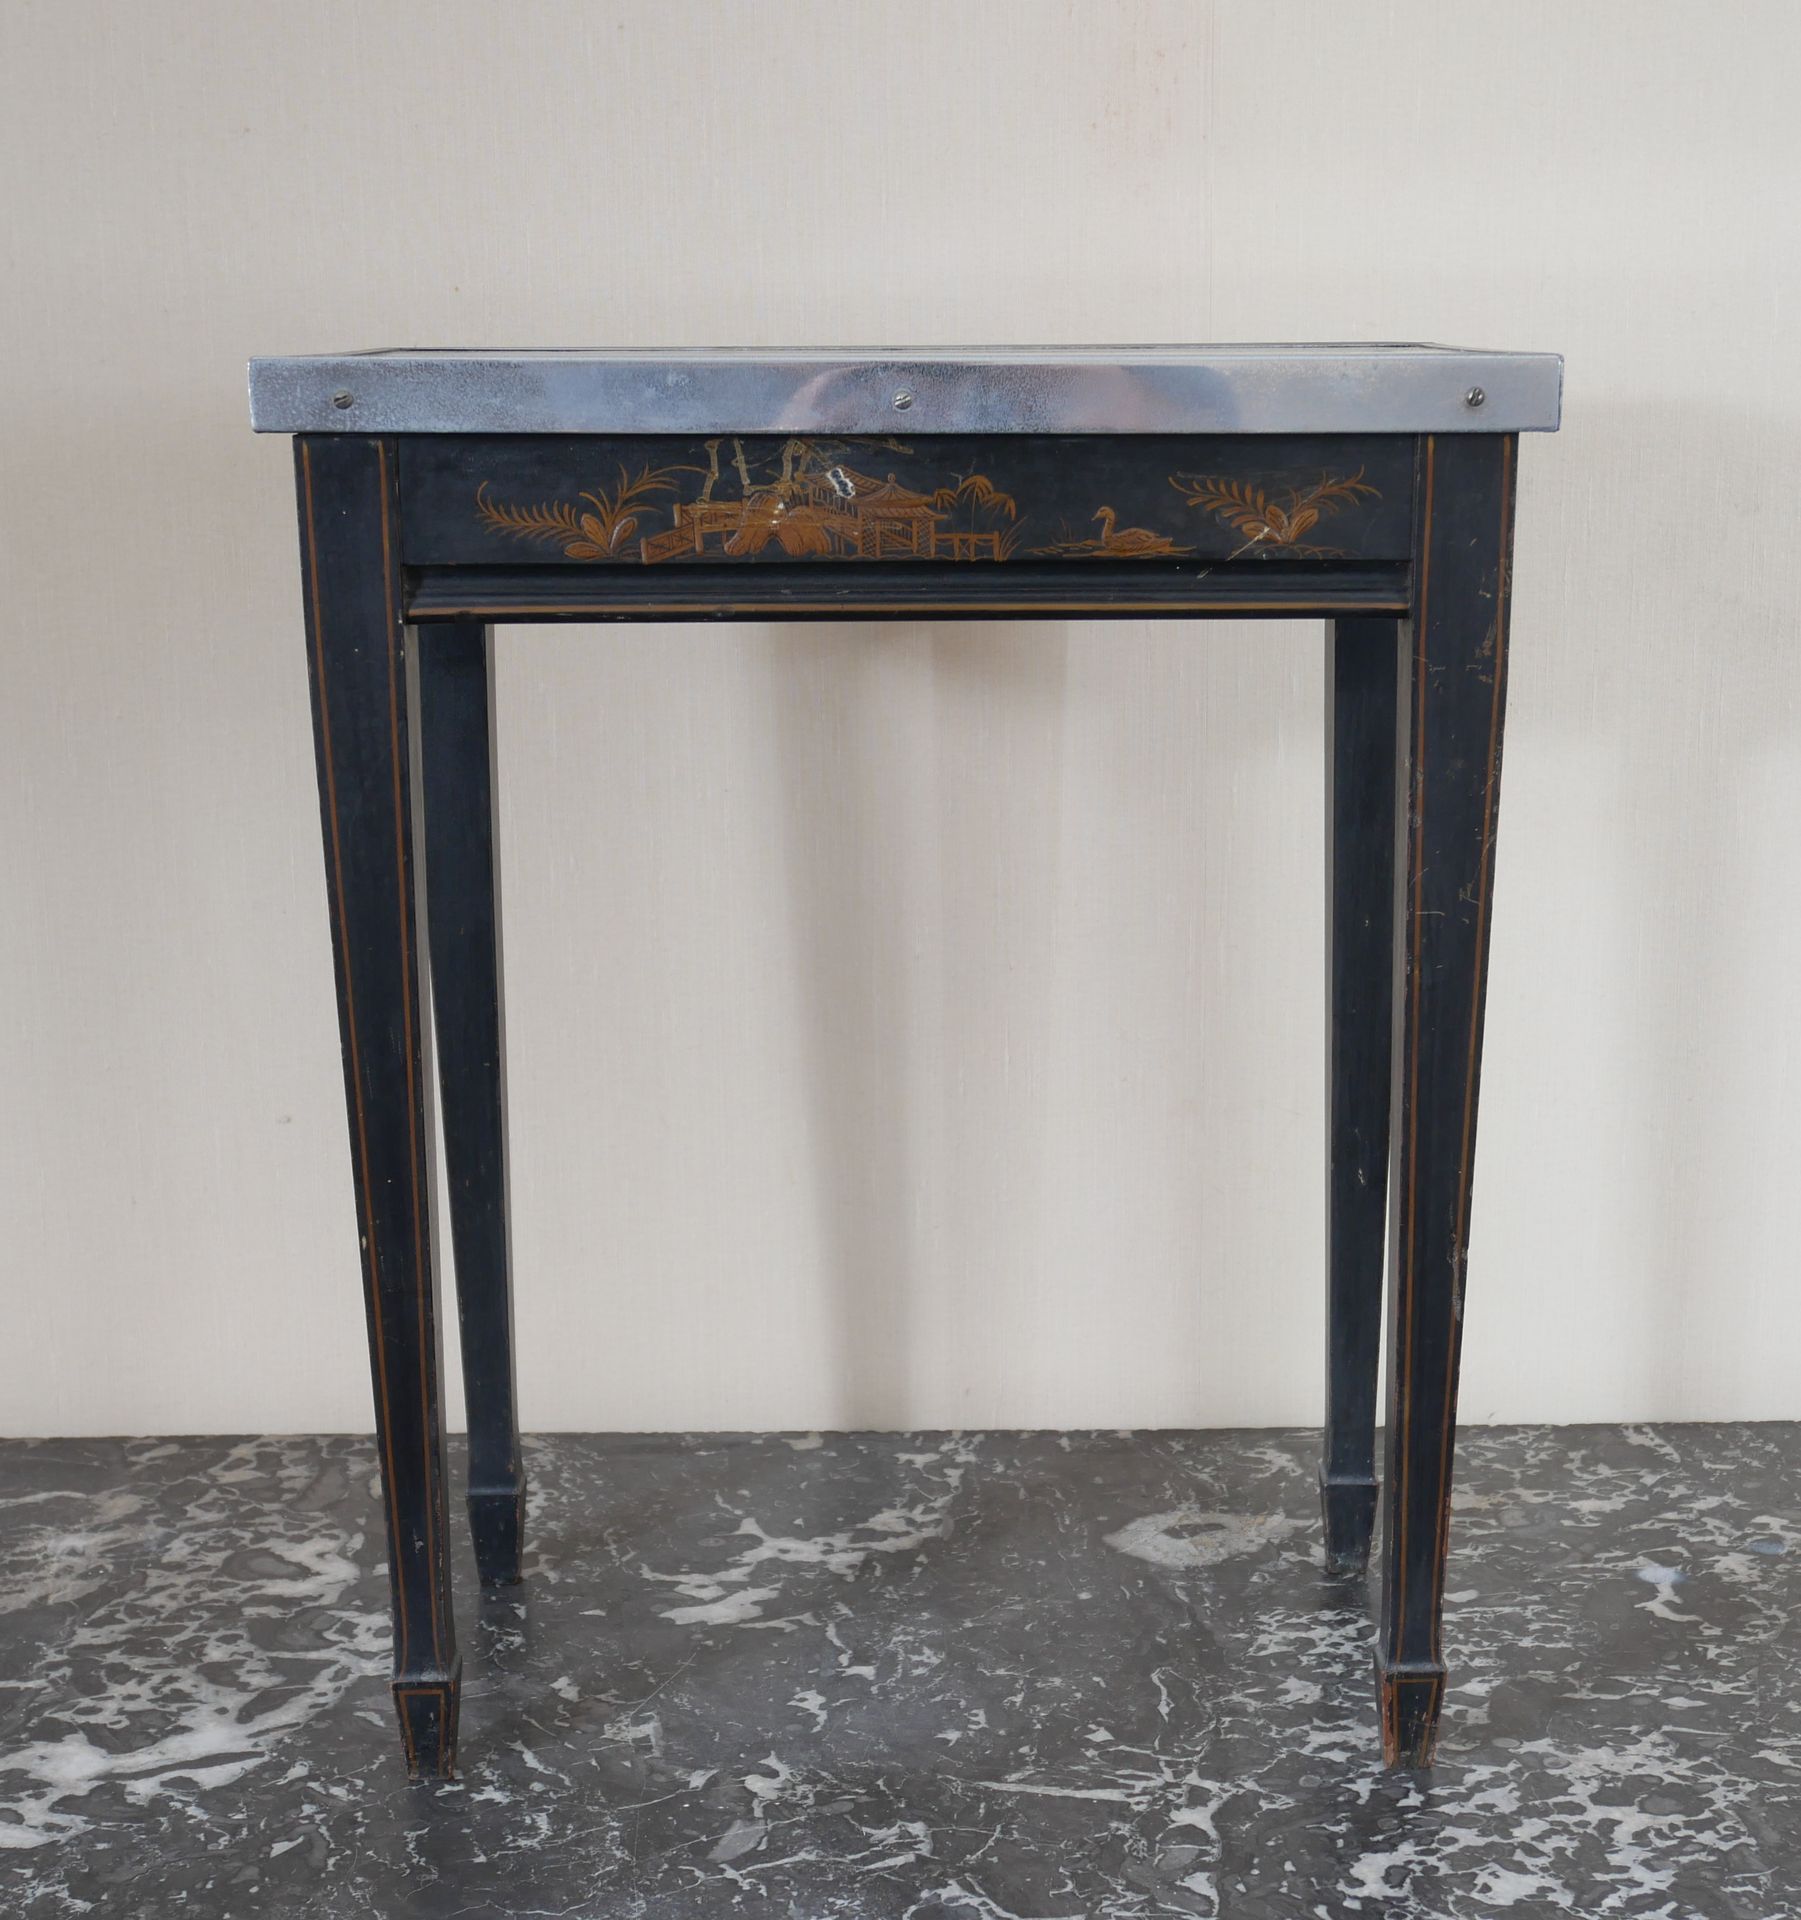 Null 
长方形黑漆木制镀金风景装饰基座桌，中国




高：49，宽：40.5，深：25.5厘米（损坏的玻璃桌面由一个螺丝固定的金属框架固定，丢失）。